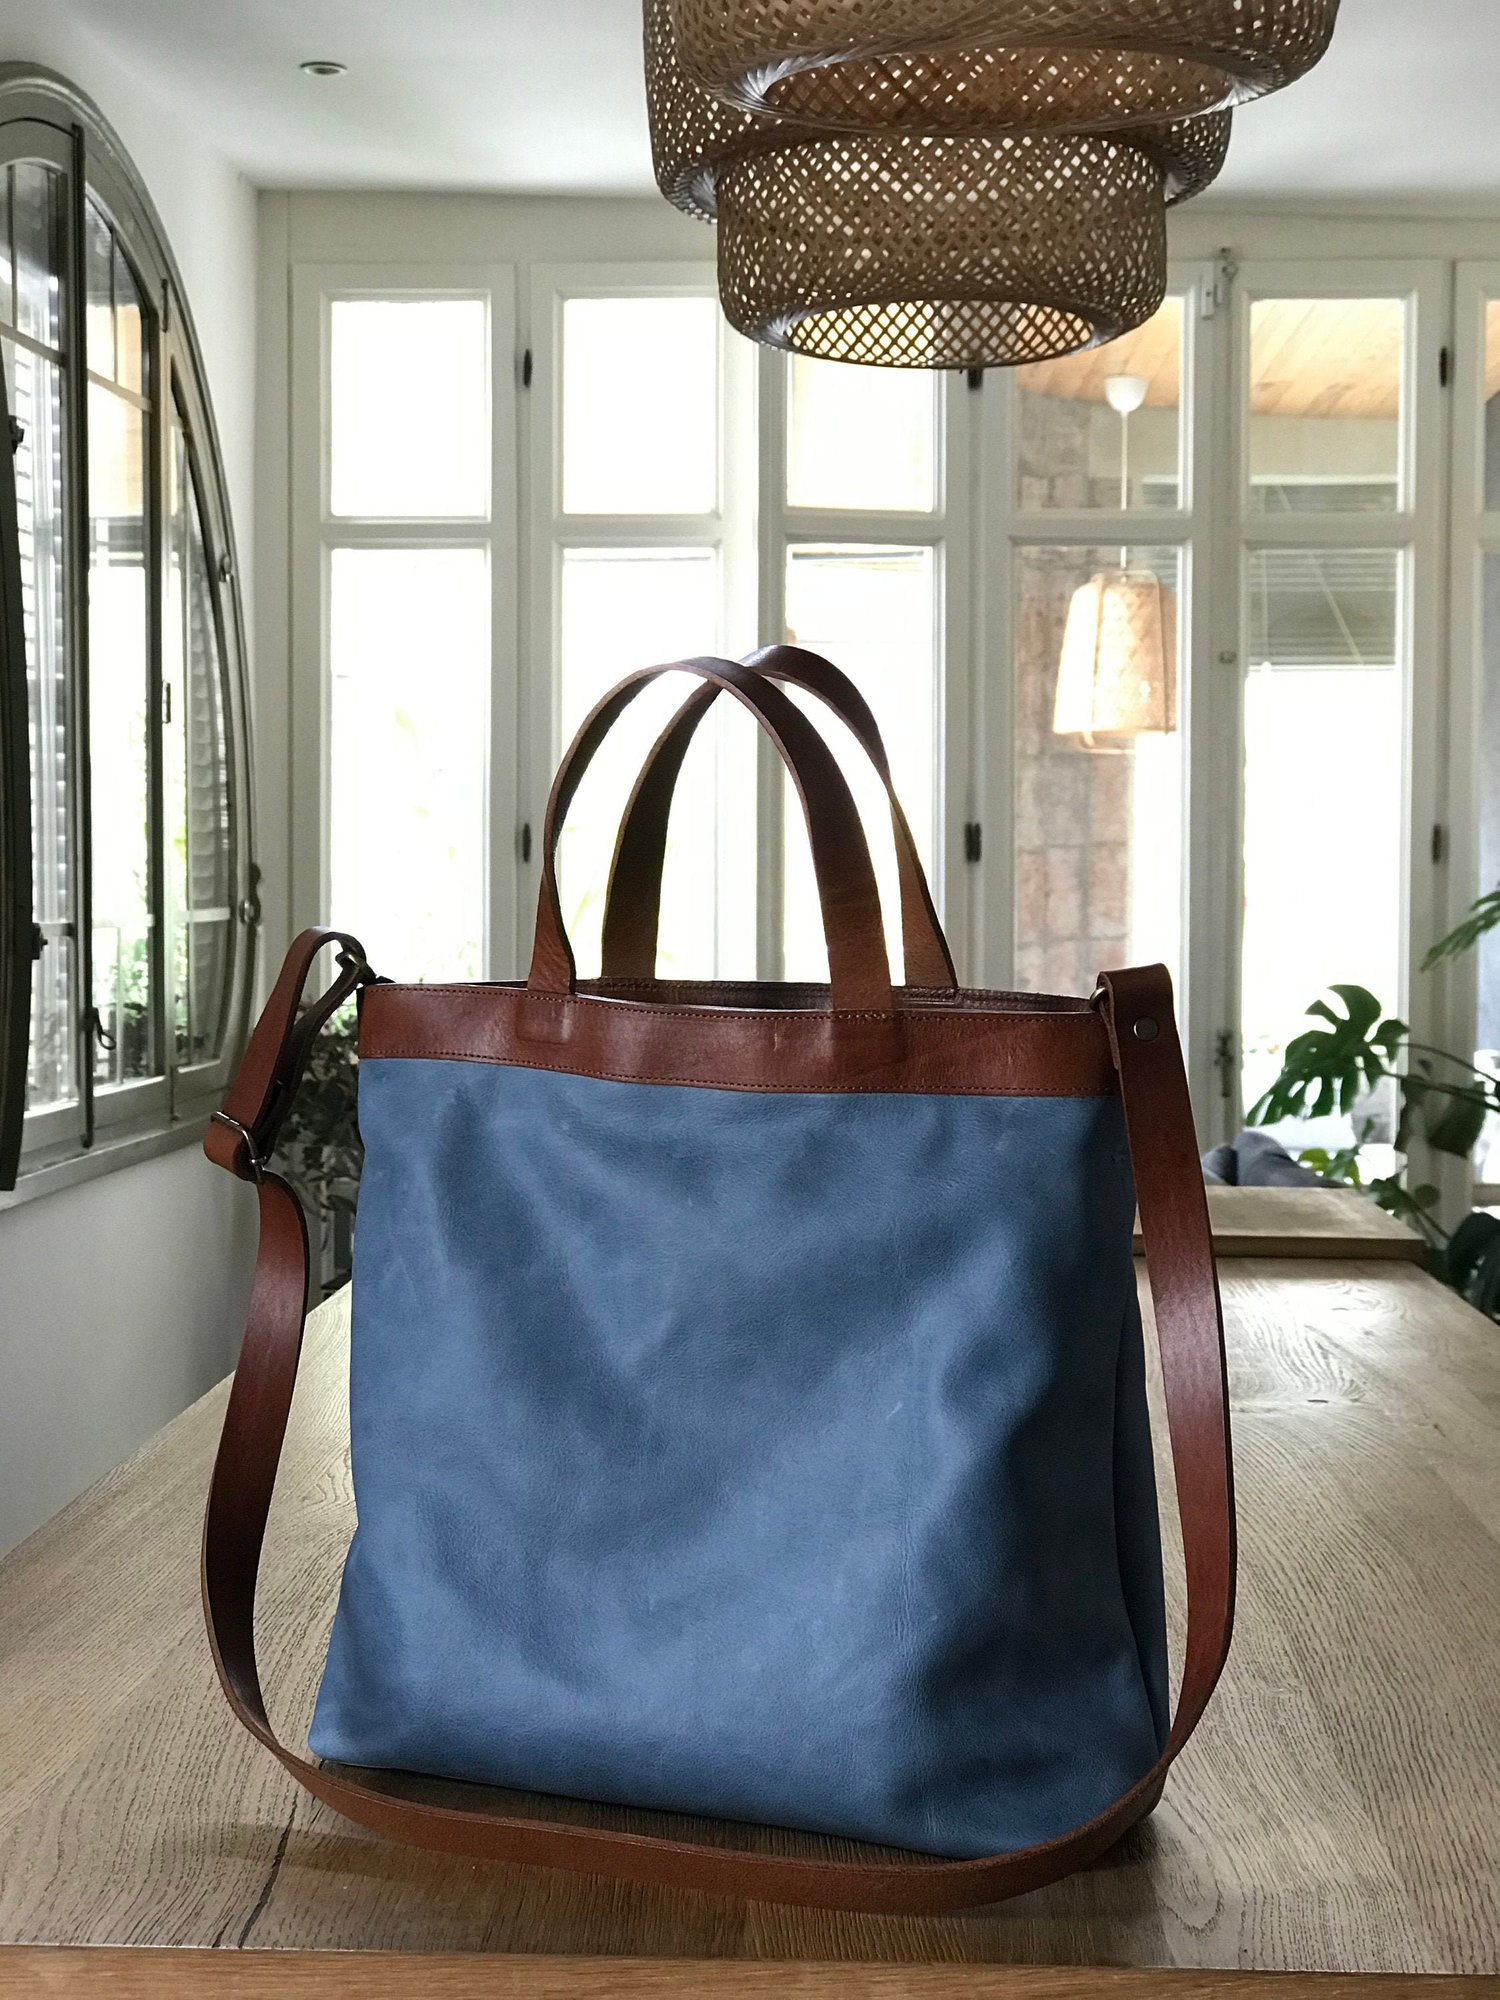 Designer luggage worth it? : r/handbags